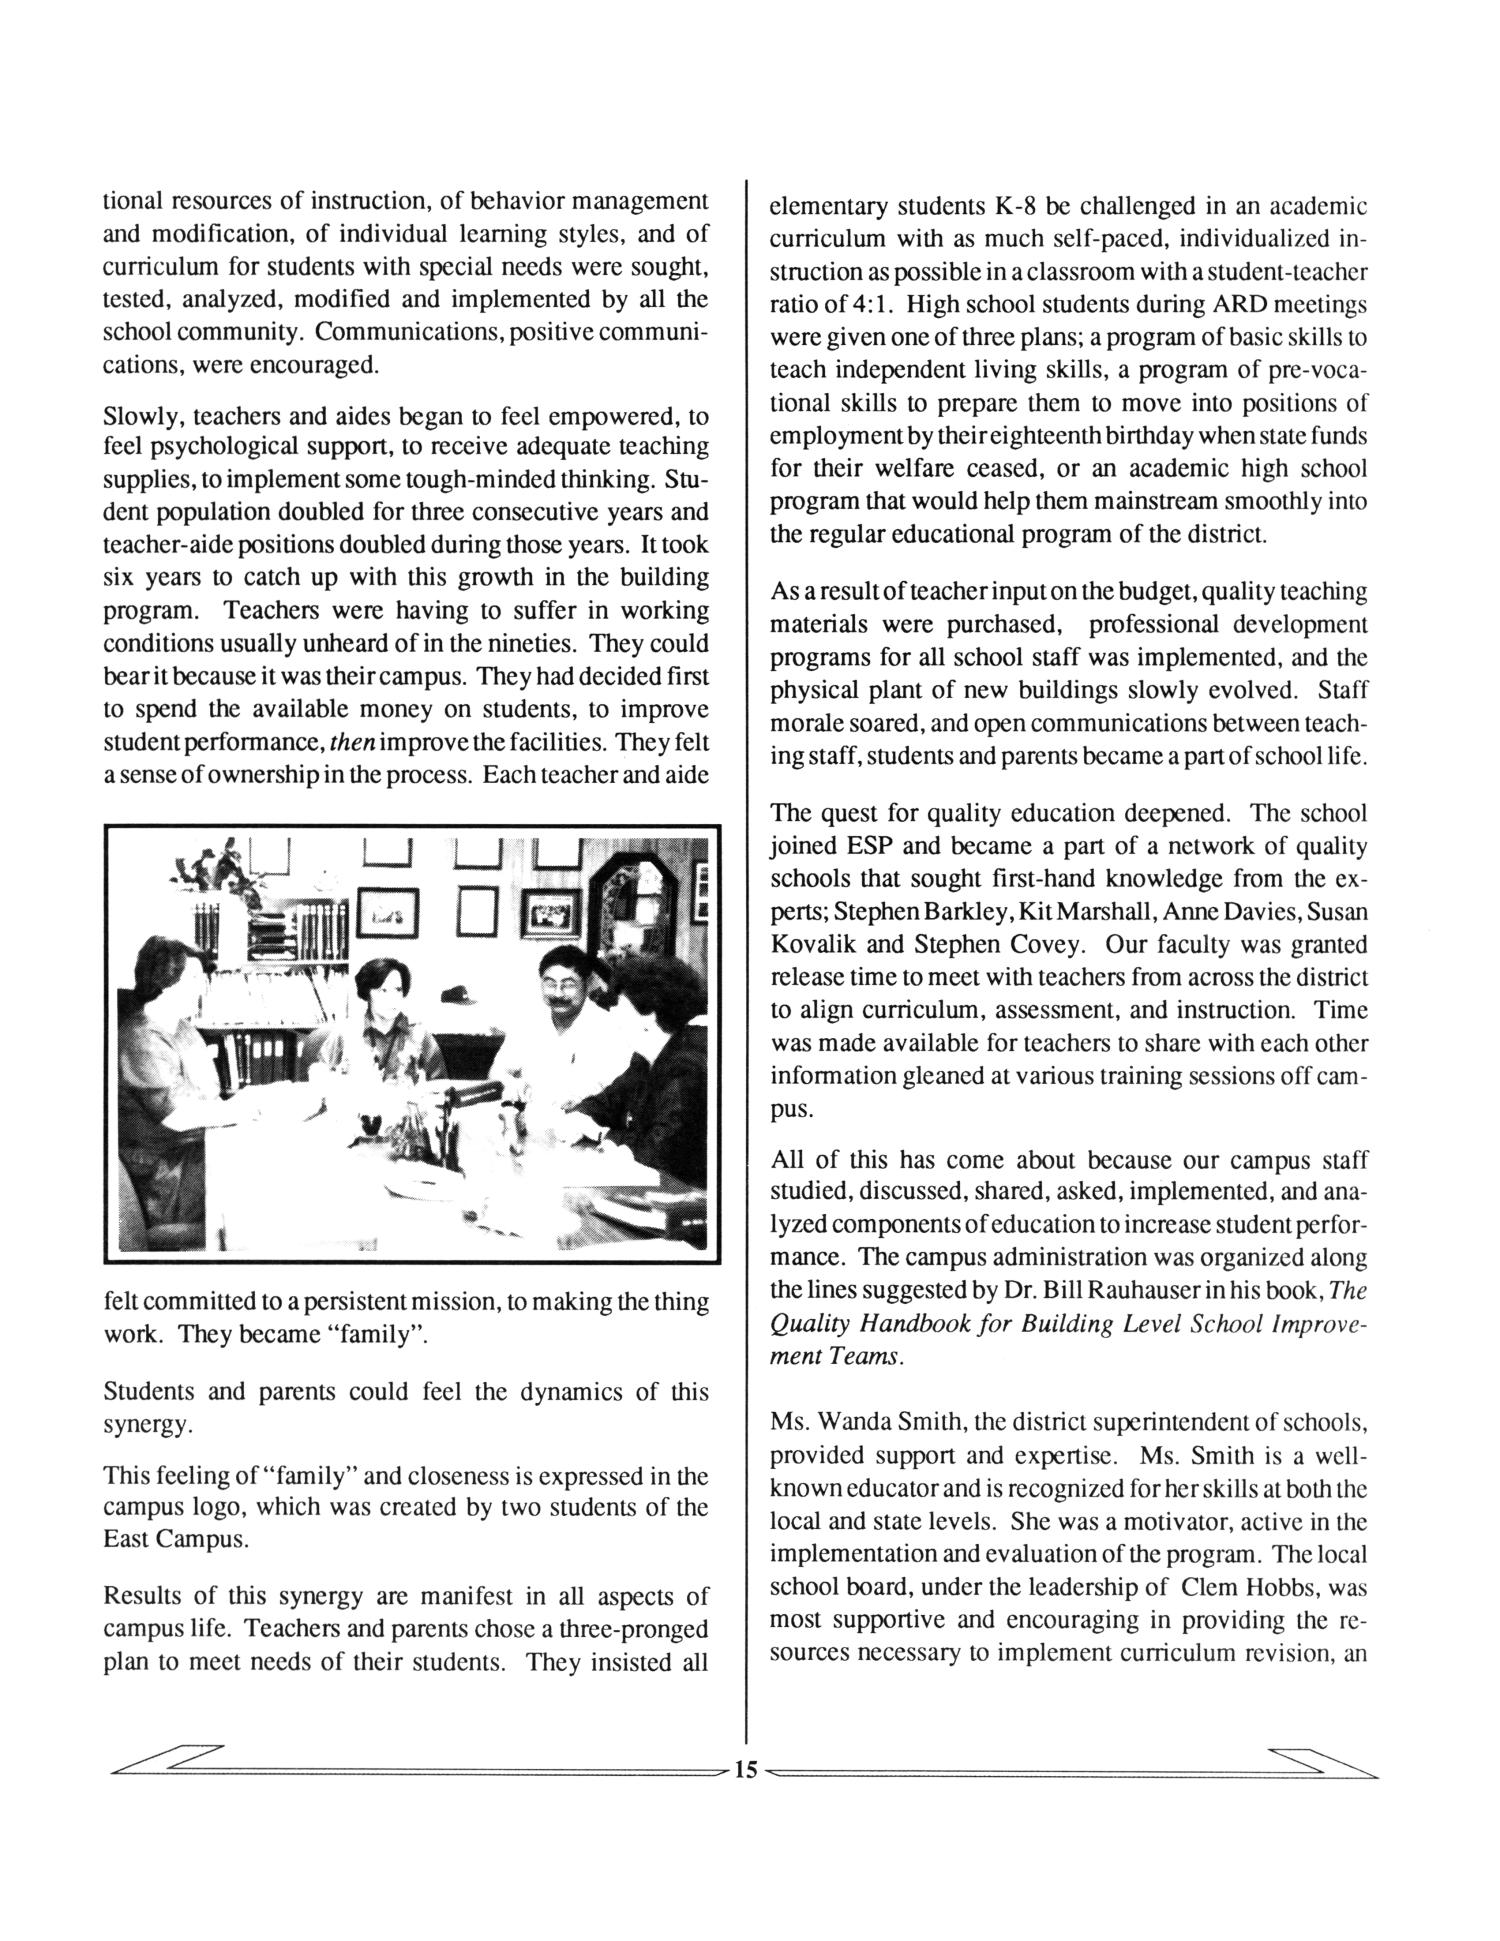 Journal of the Effective Schools Project, Volume 1, 1994
                                                
                                                    15
                                                